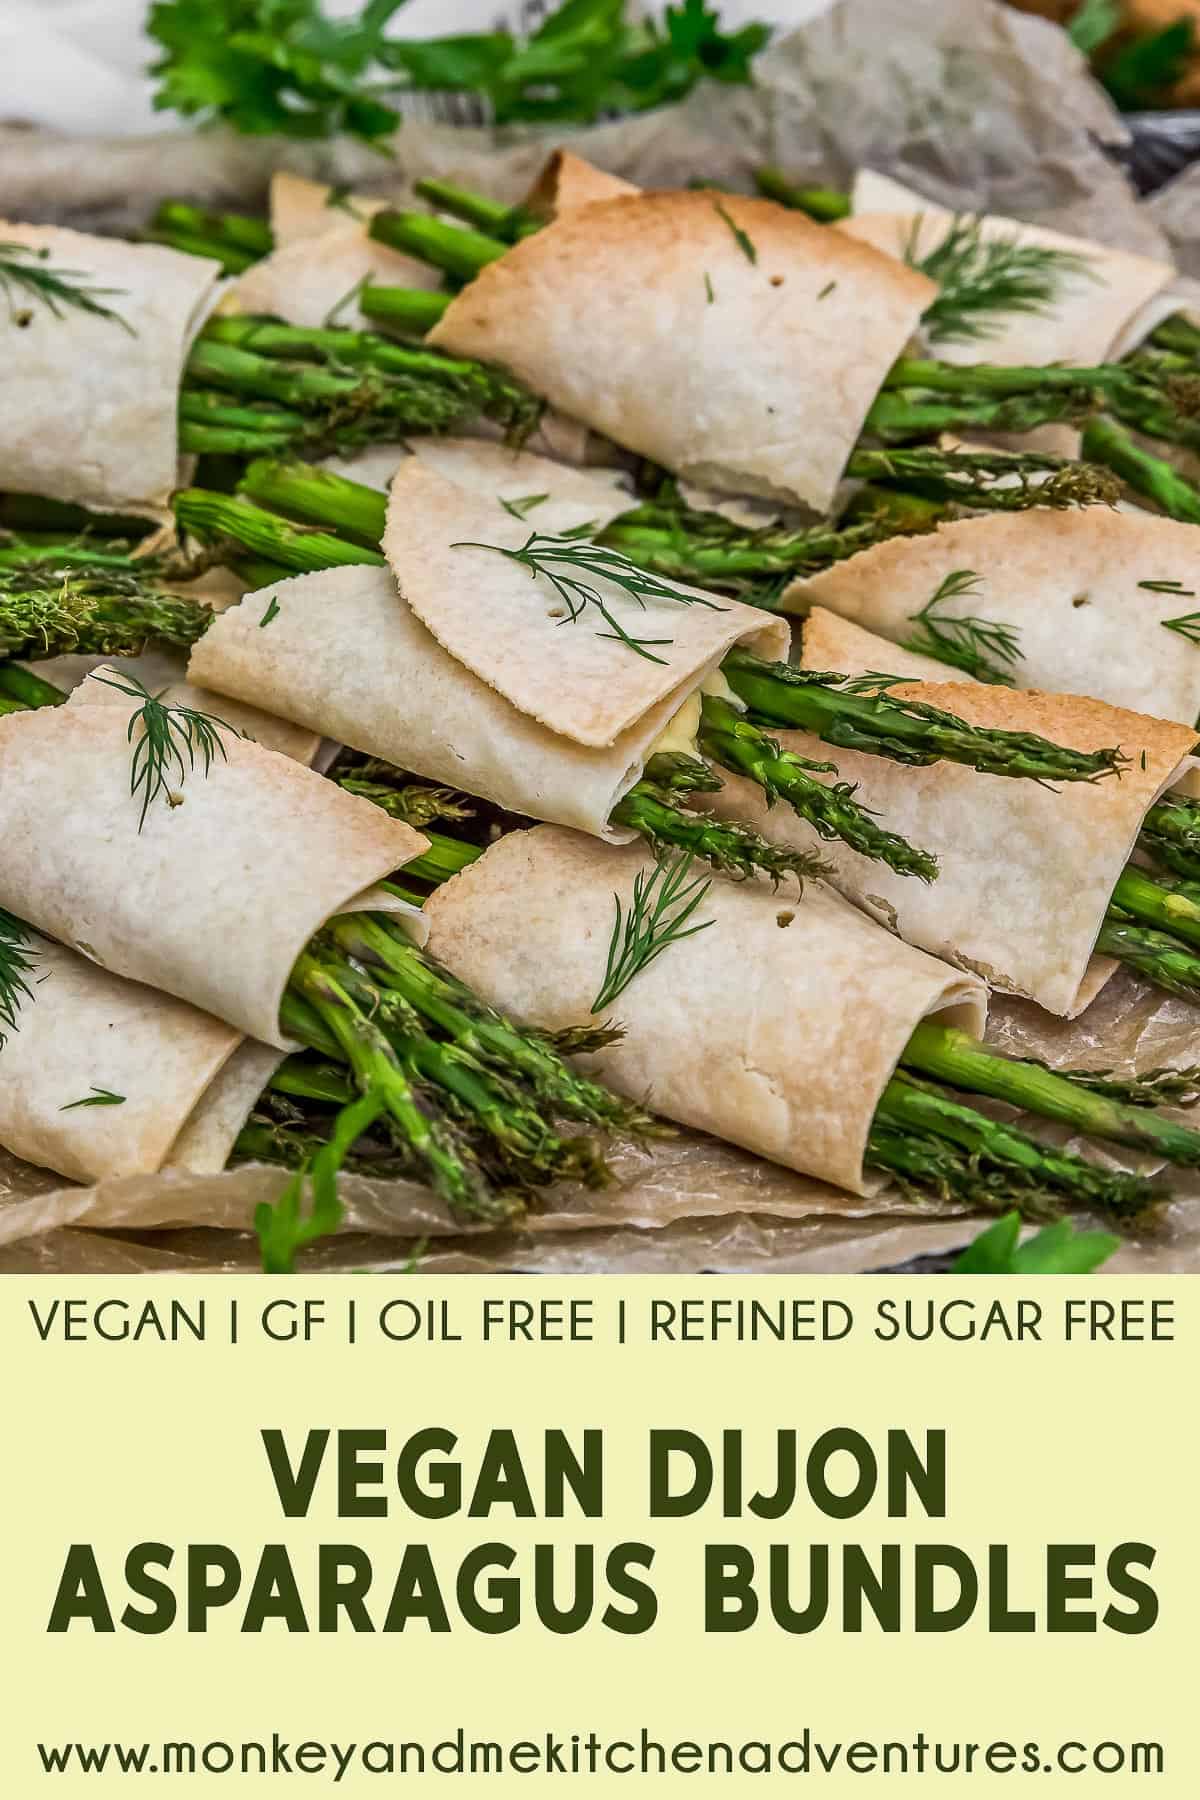 Vegan Dijon Asparagus Bundles with text description